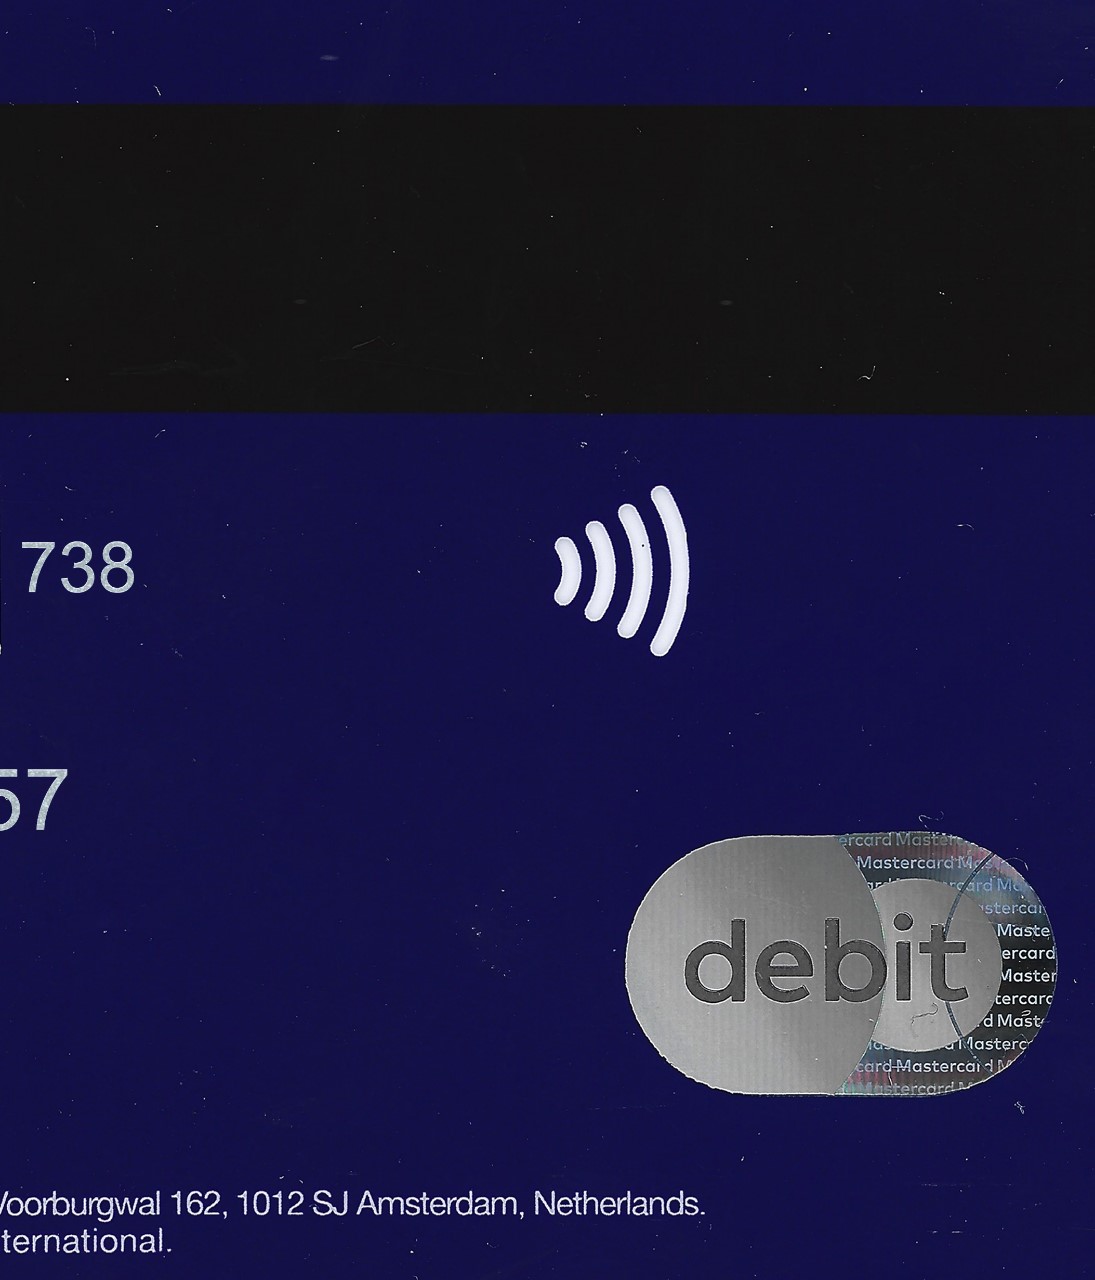  Credit Card-4